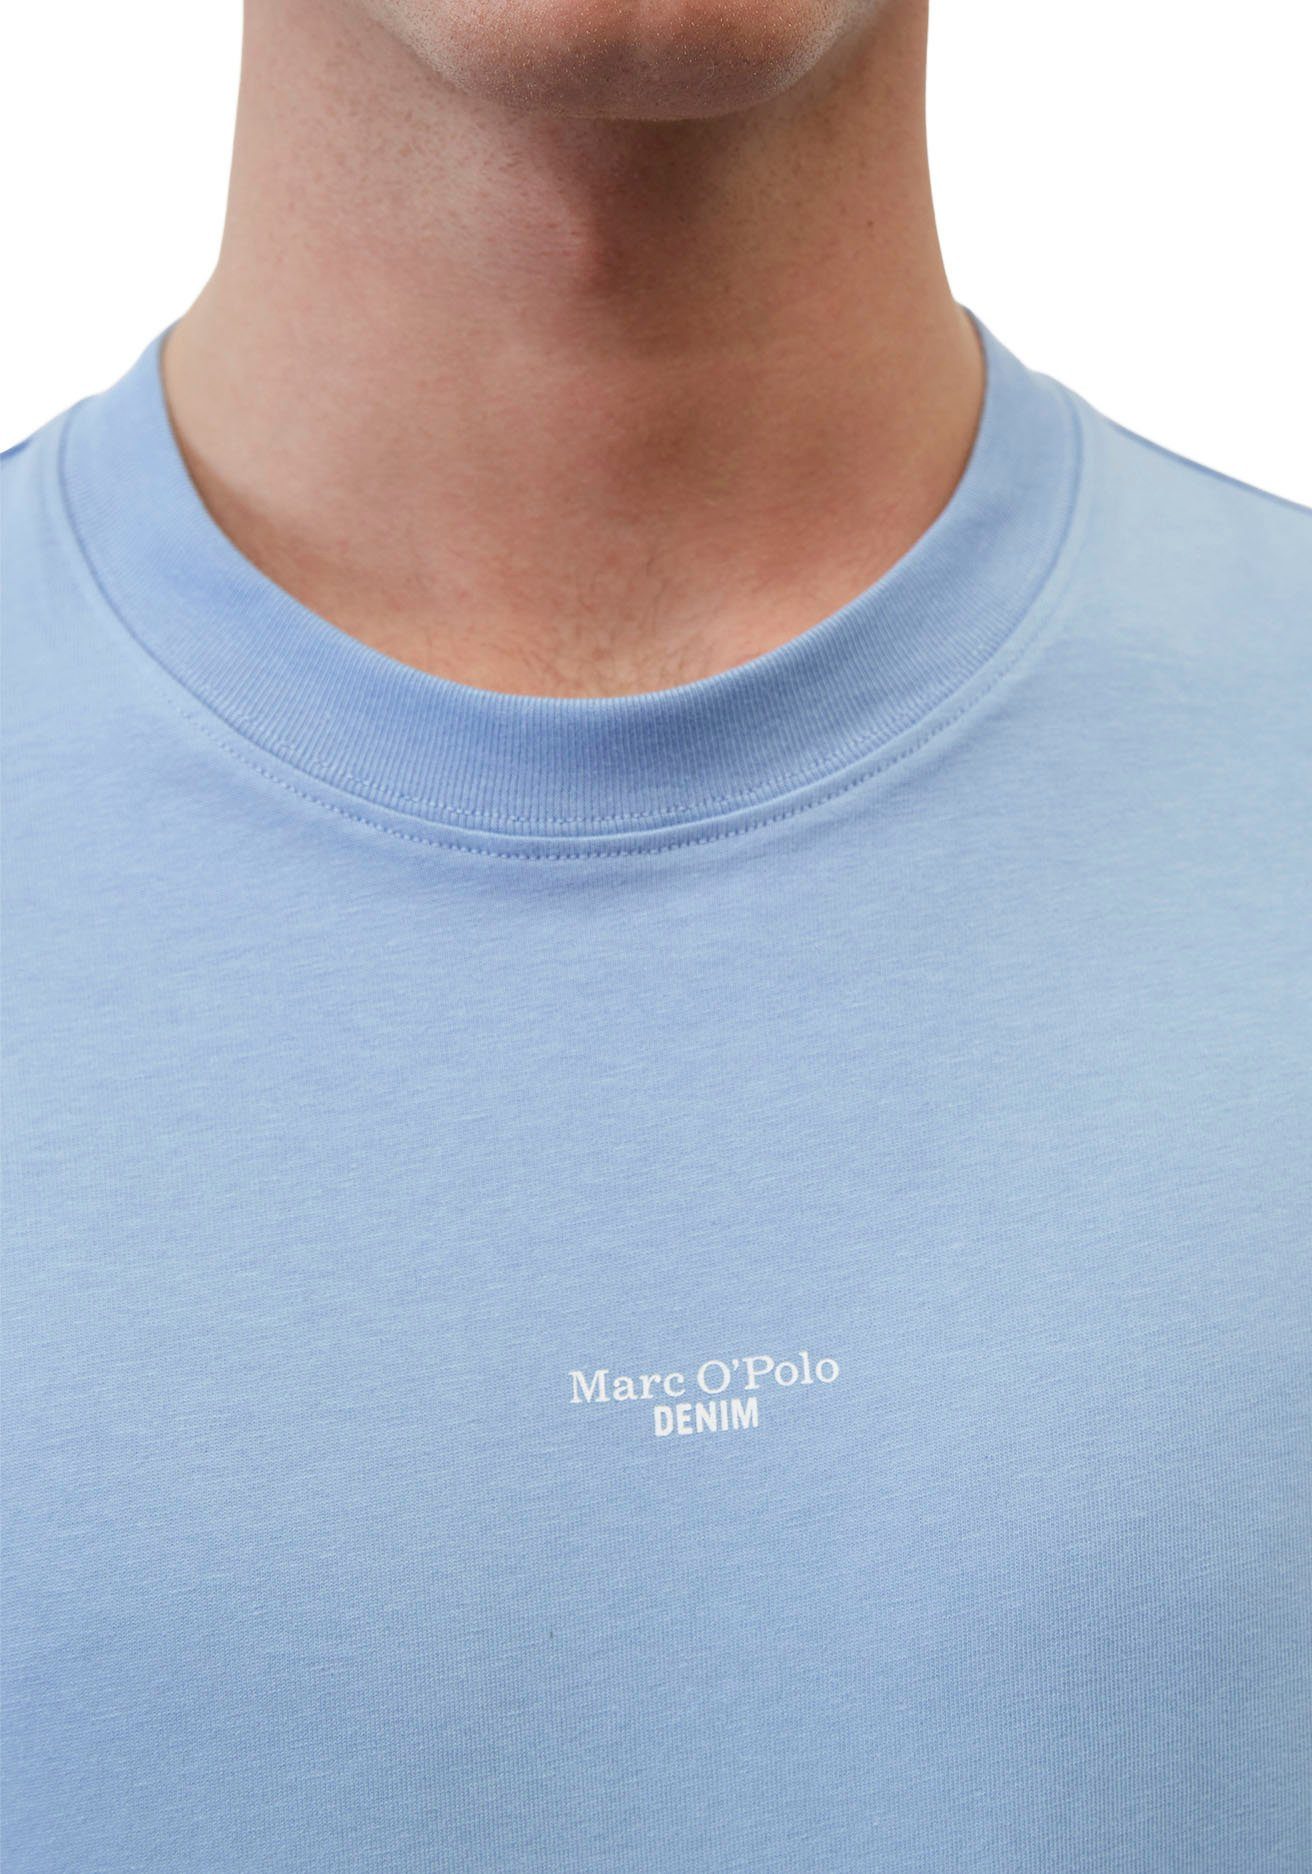 T-Shirt vorne Labeling mittelblau DENIM mittig O'Polo mit Marc